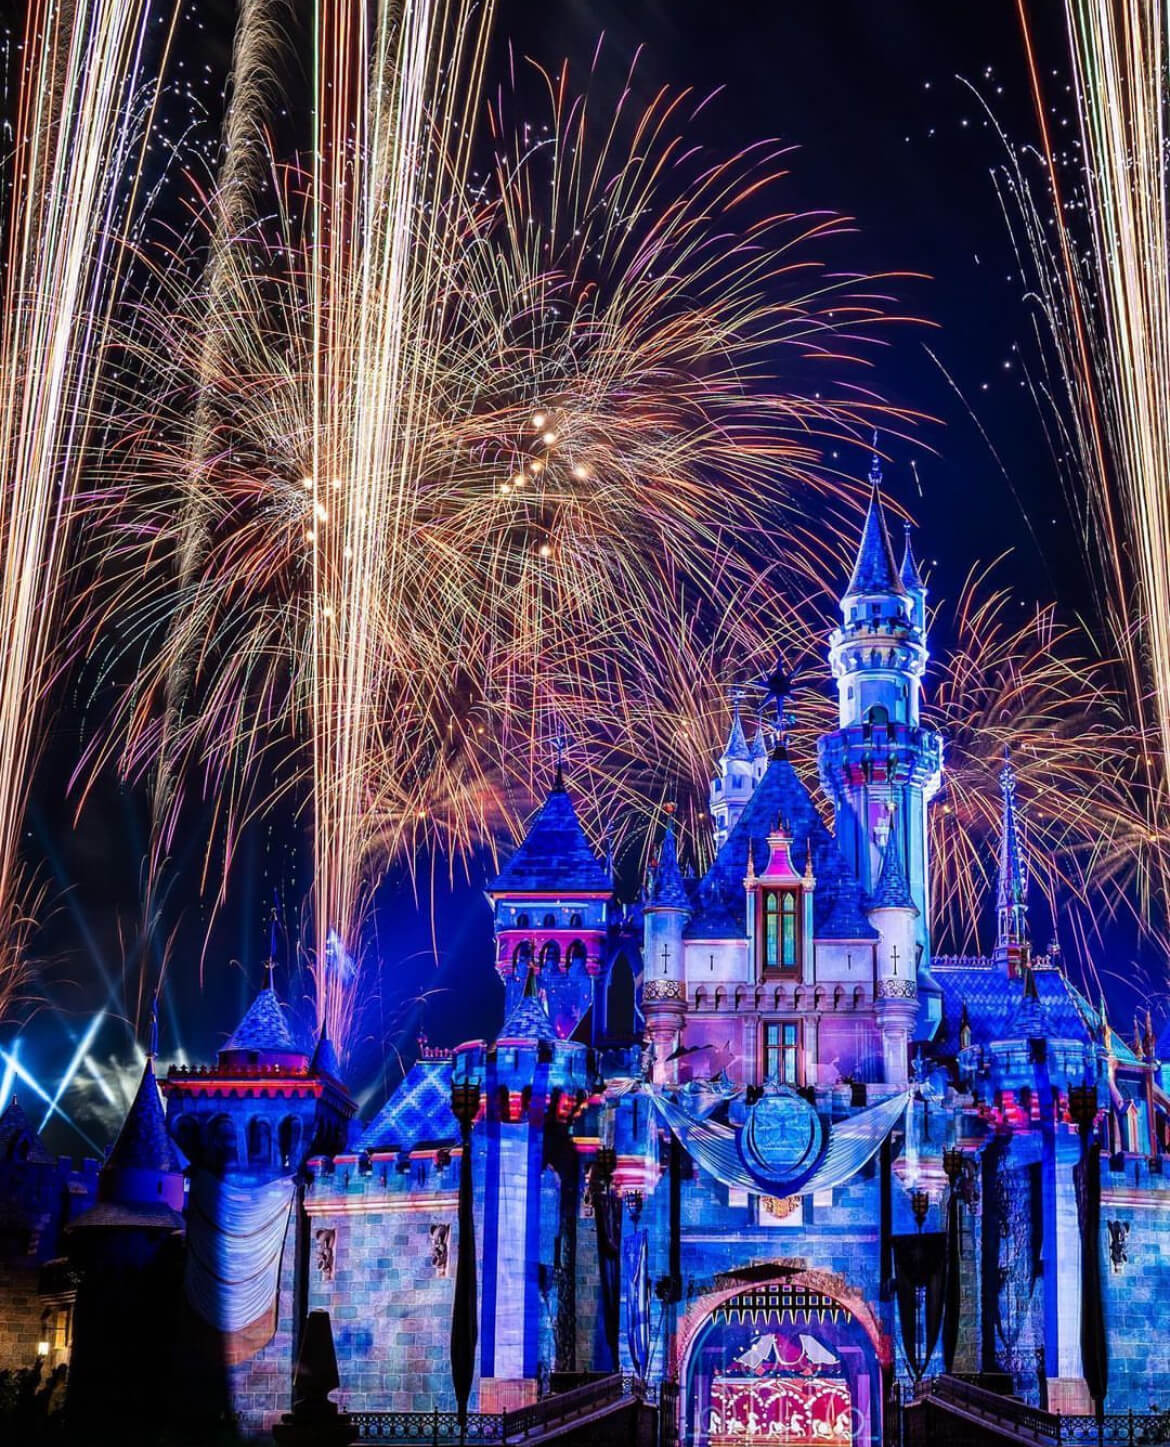 The fireworks display at Disneyland.